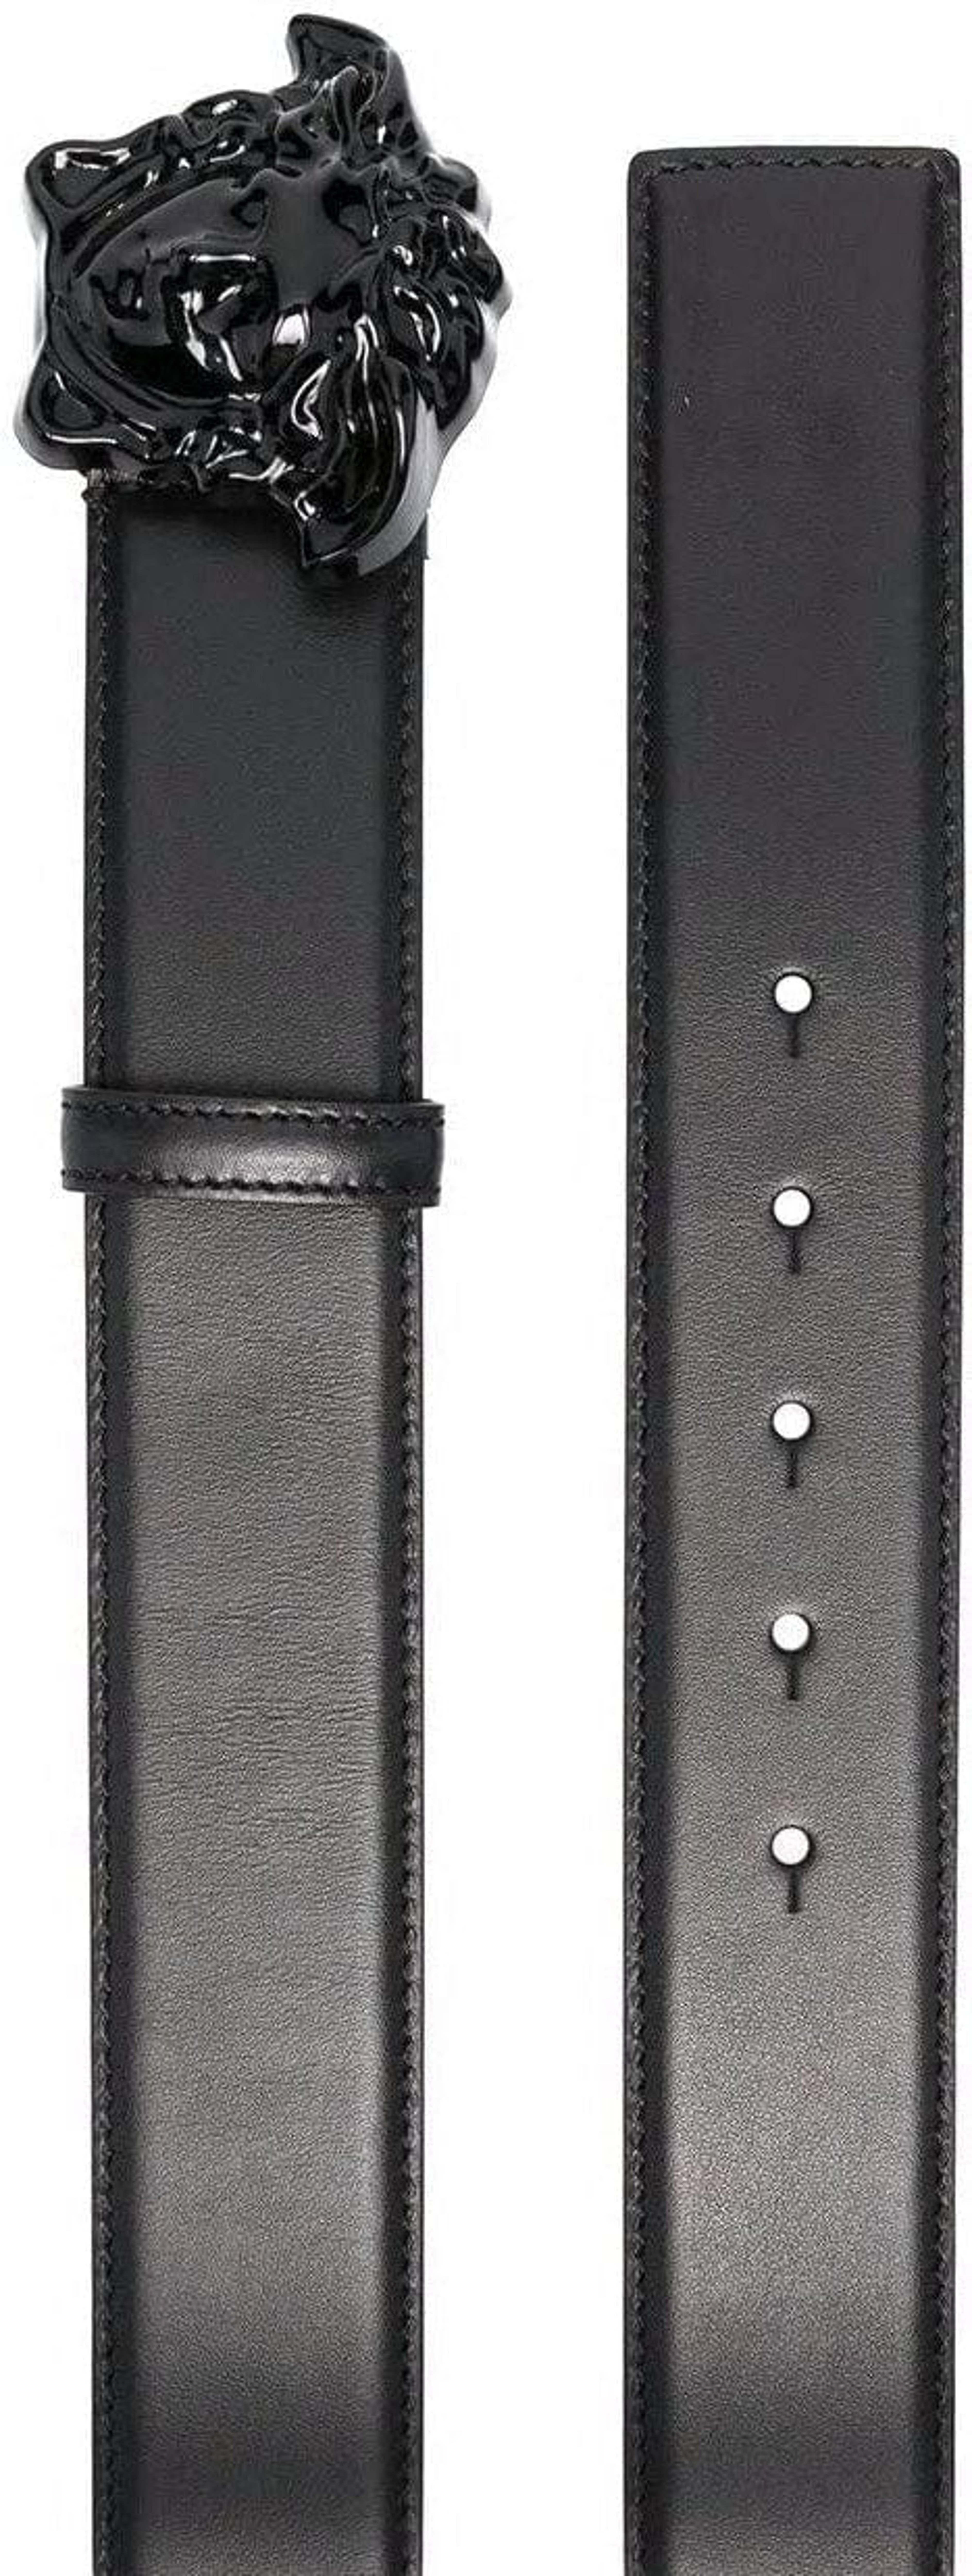 Alternate View 2 of Versace Medusa Buckle Leather Belt